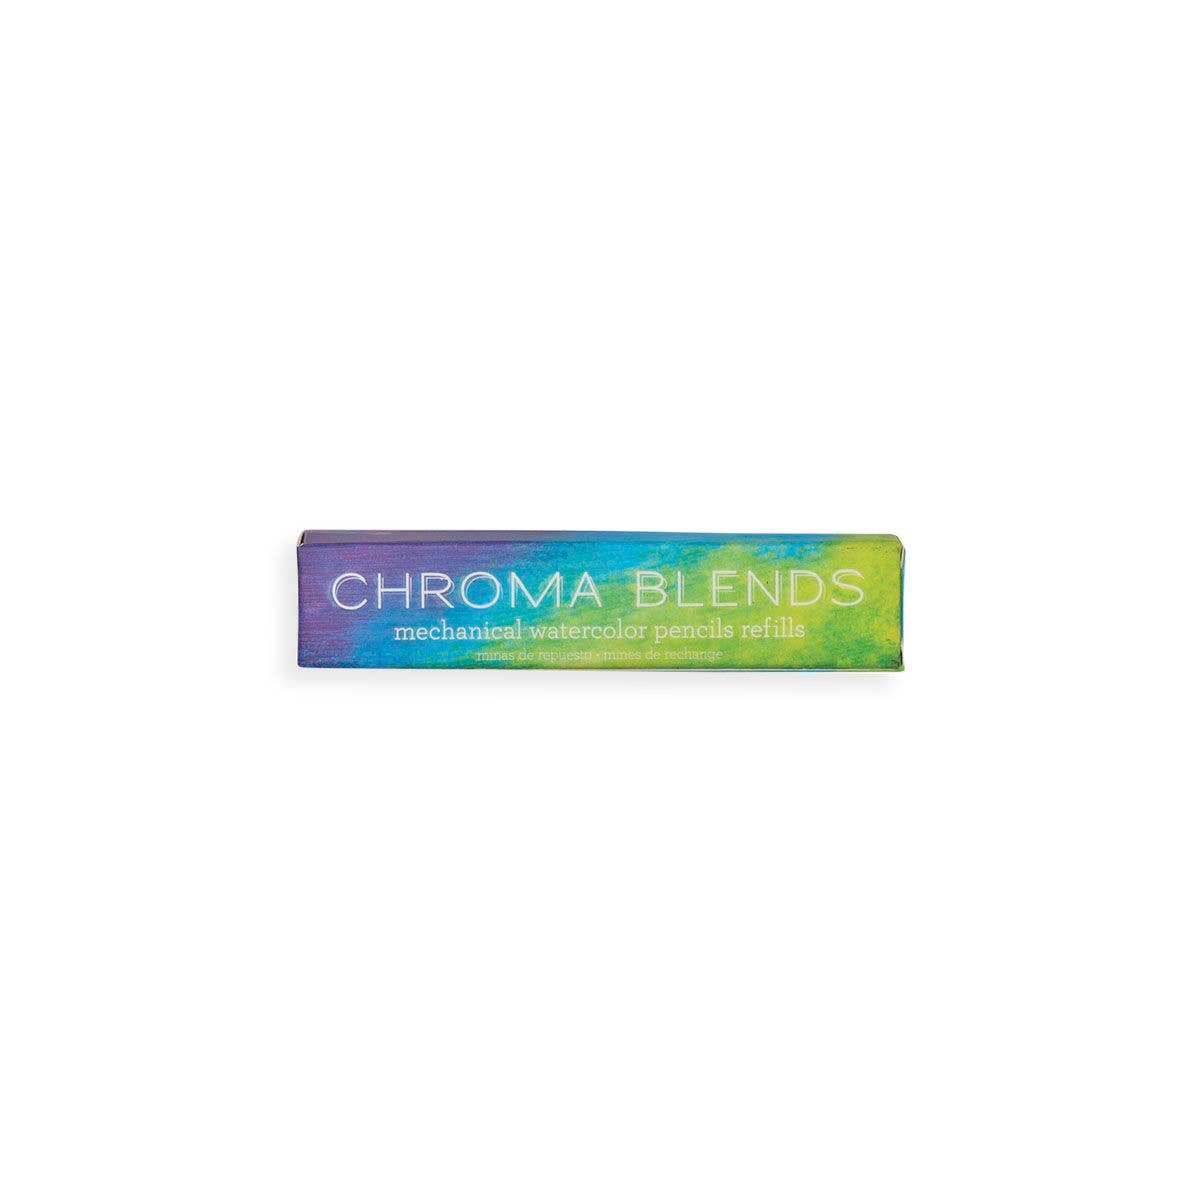 Chroma Blends Mechanical Watercolor Pencils Refills